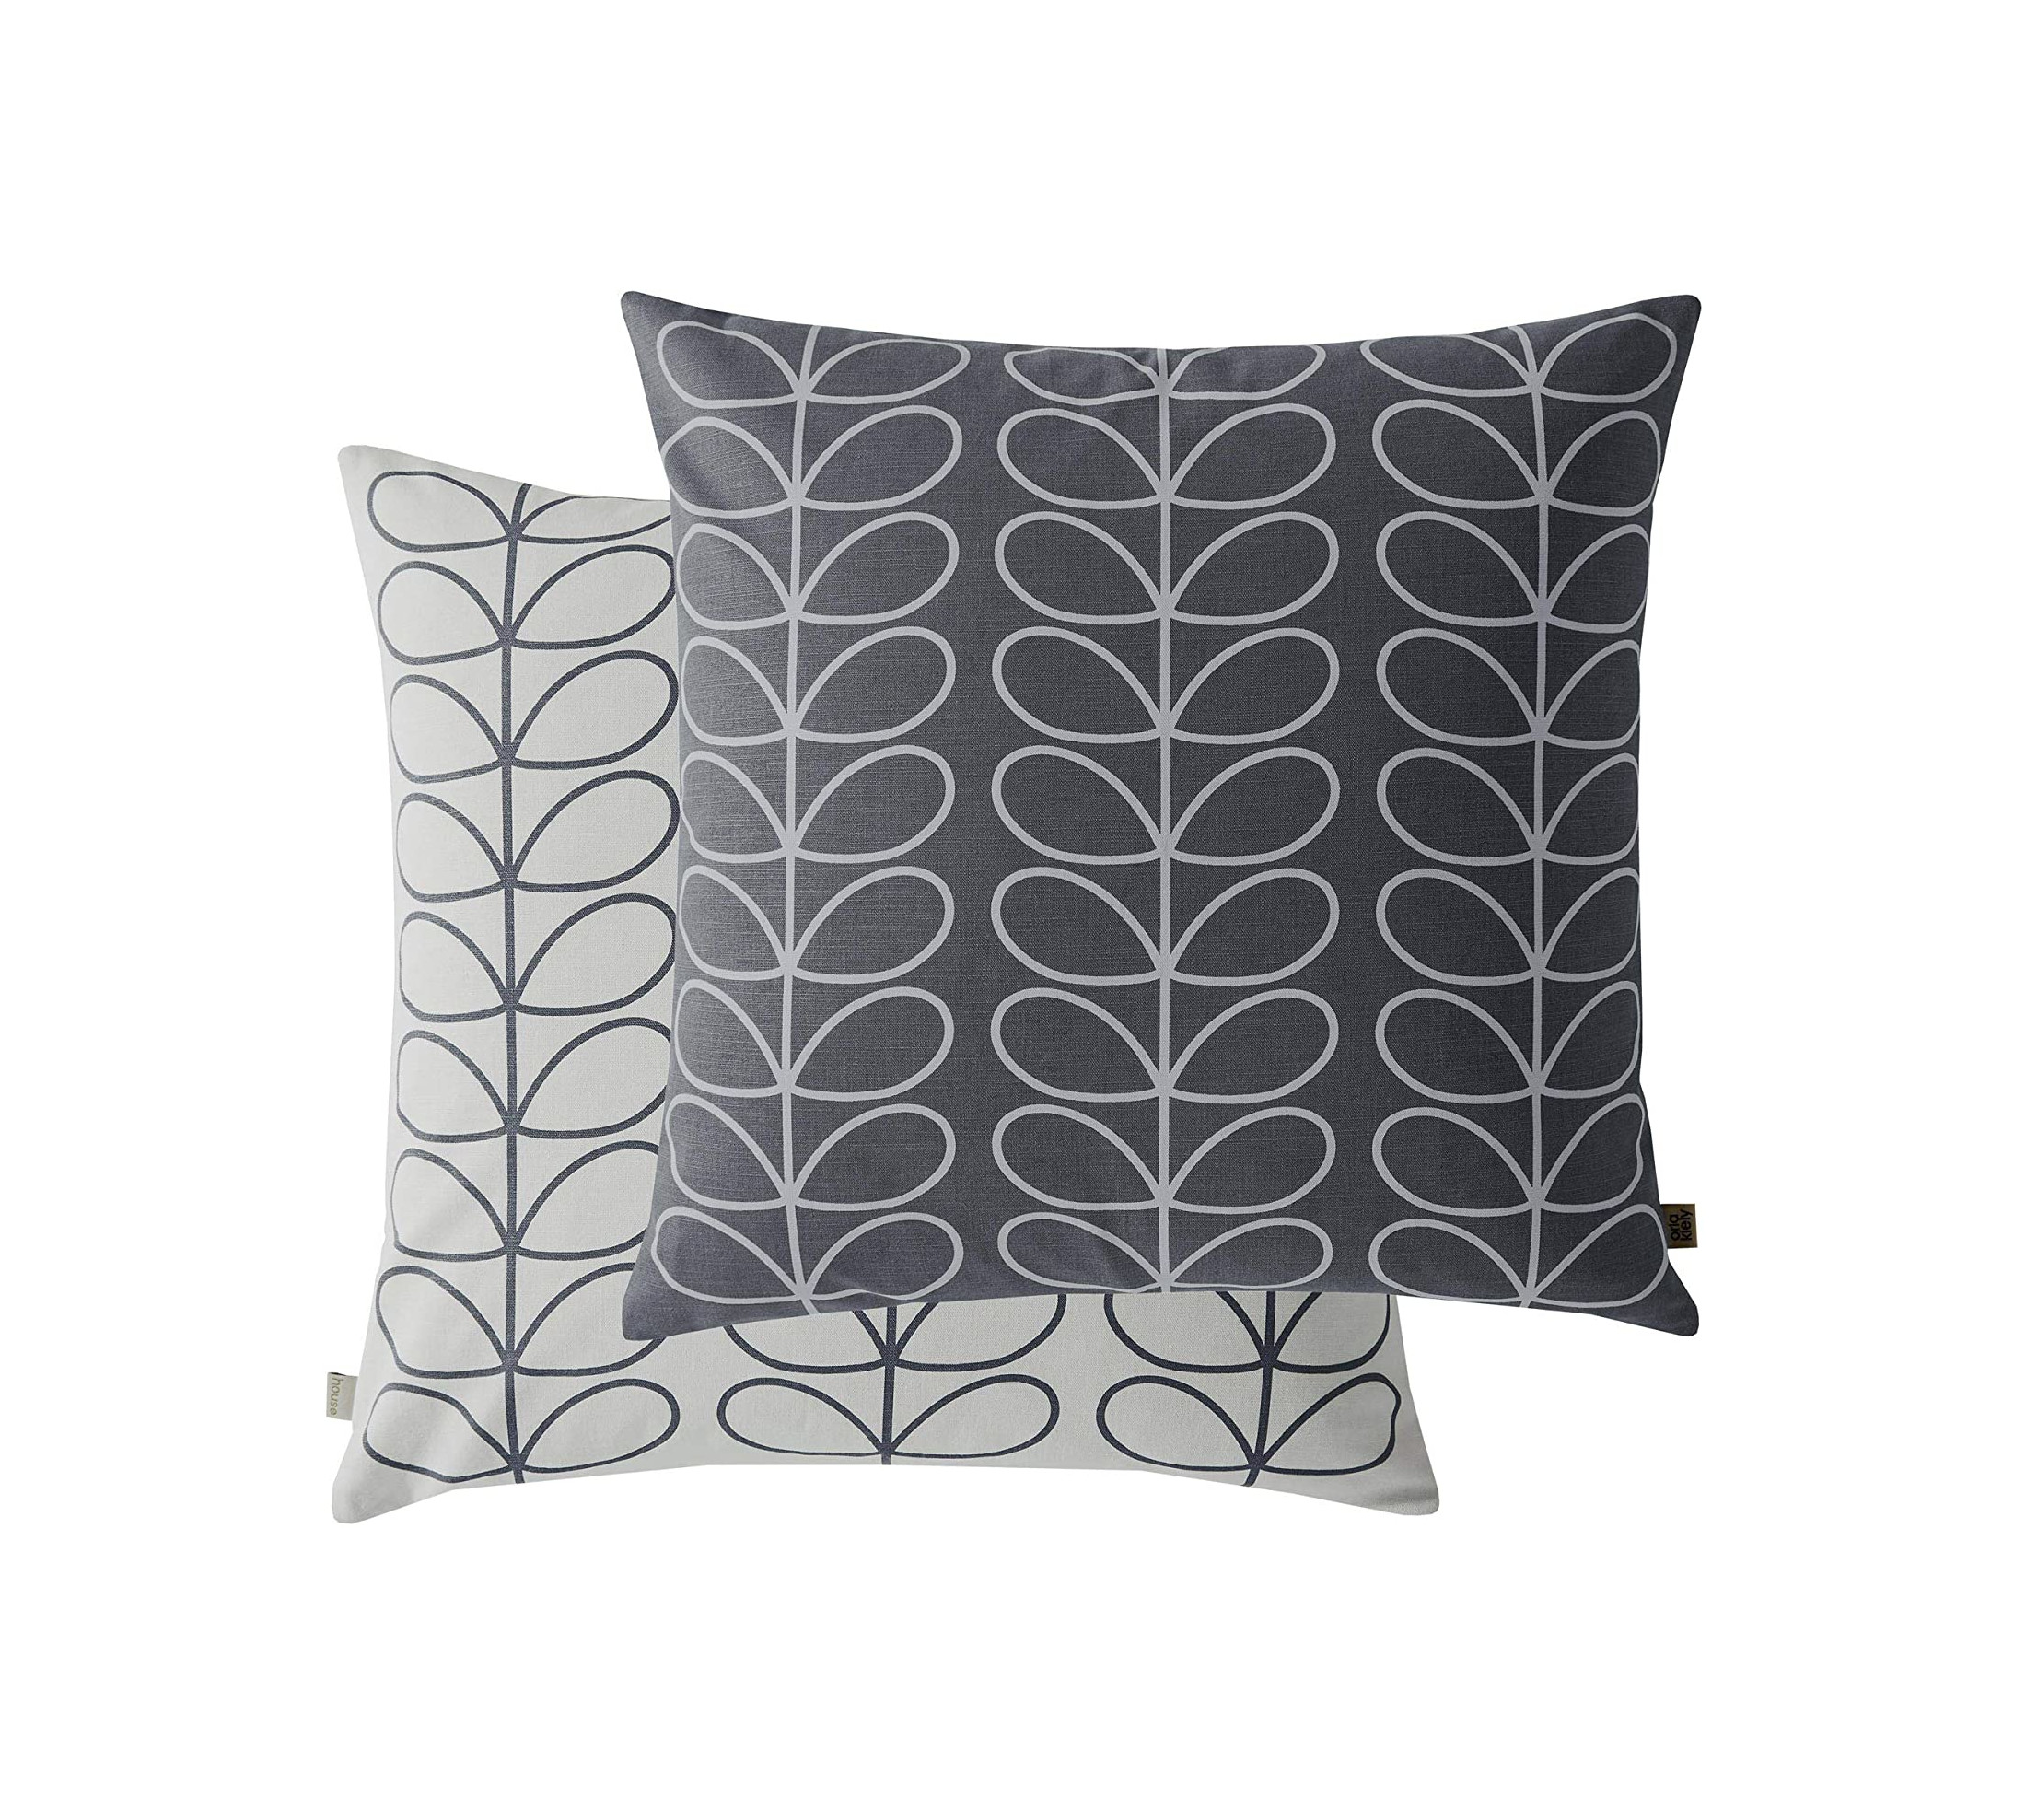 orla kiely linear stem cushion cool grey large 50cm x 50cm